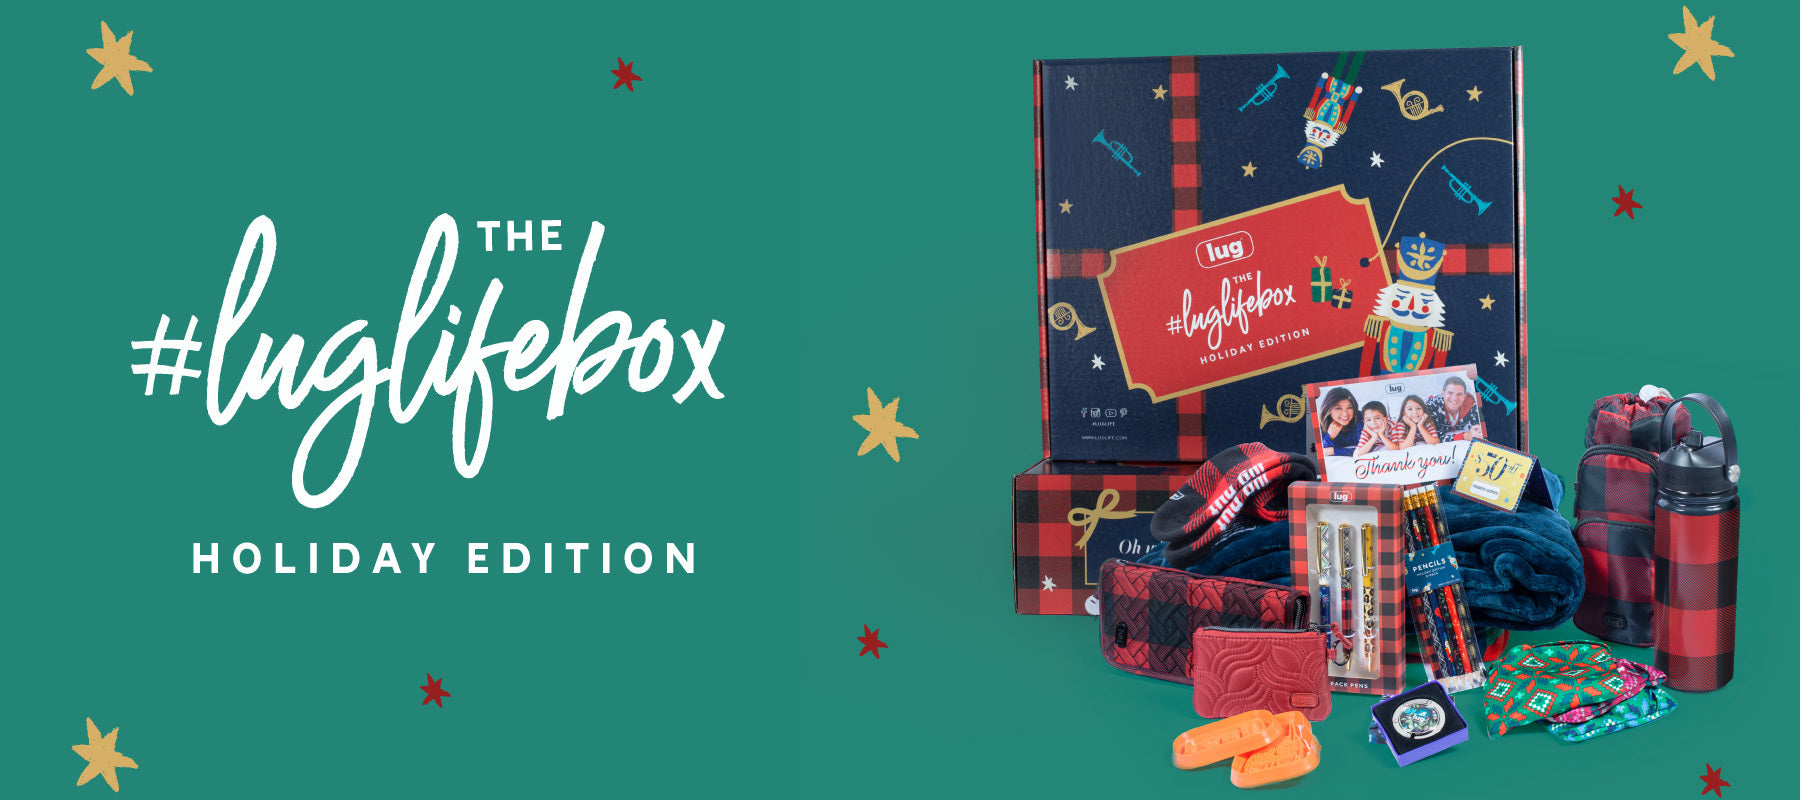 LuglifeBox Holiday Edition